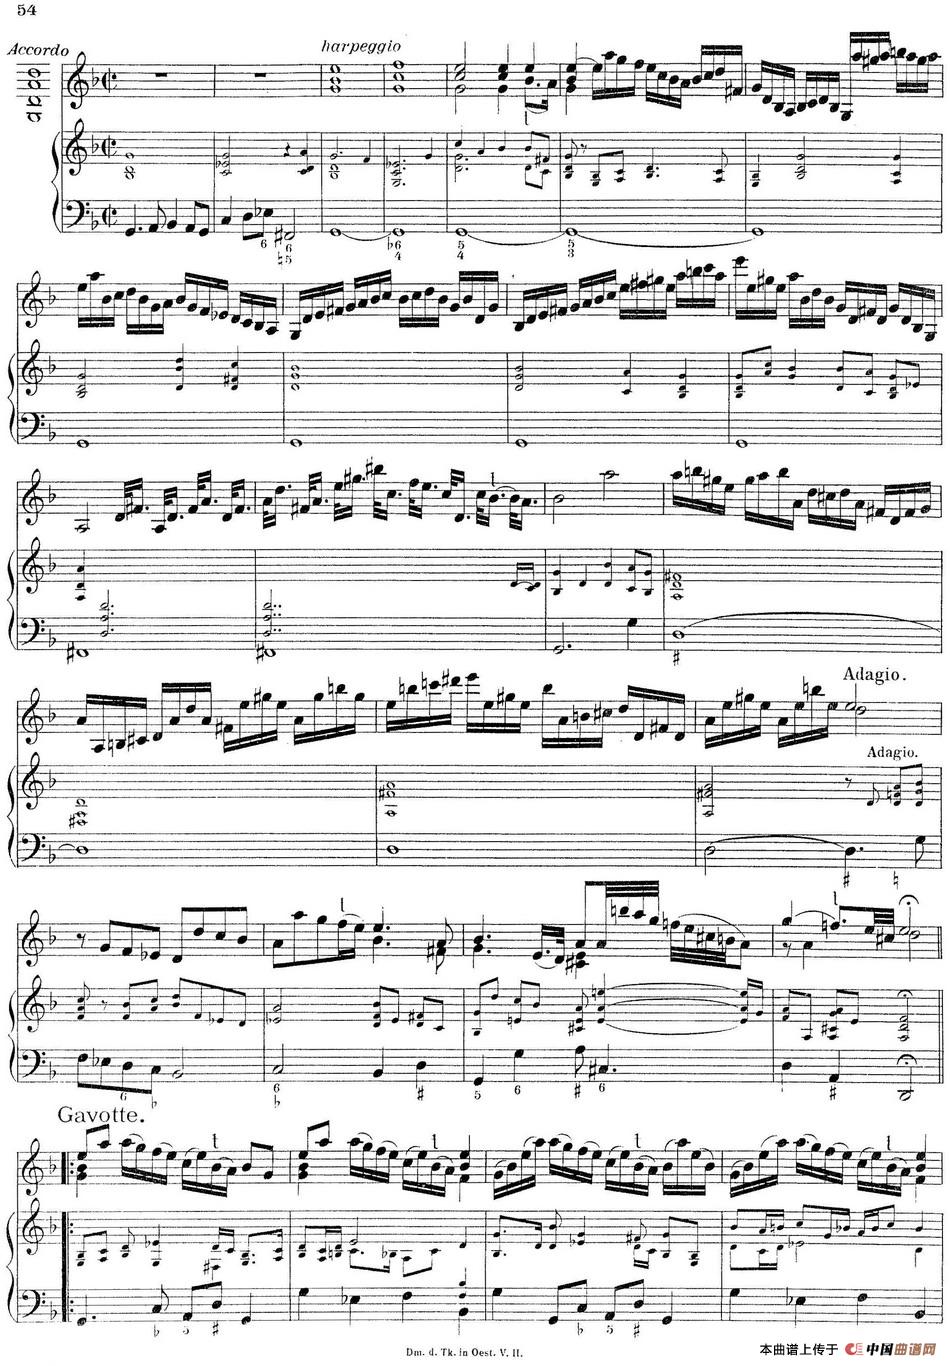 Biber Violin Sonata VI（小提琴+钢琴伴奏）